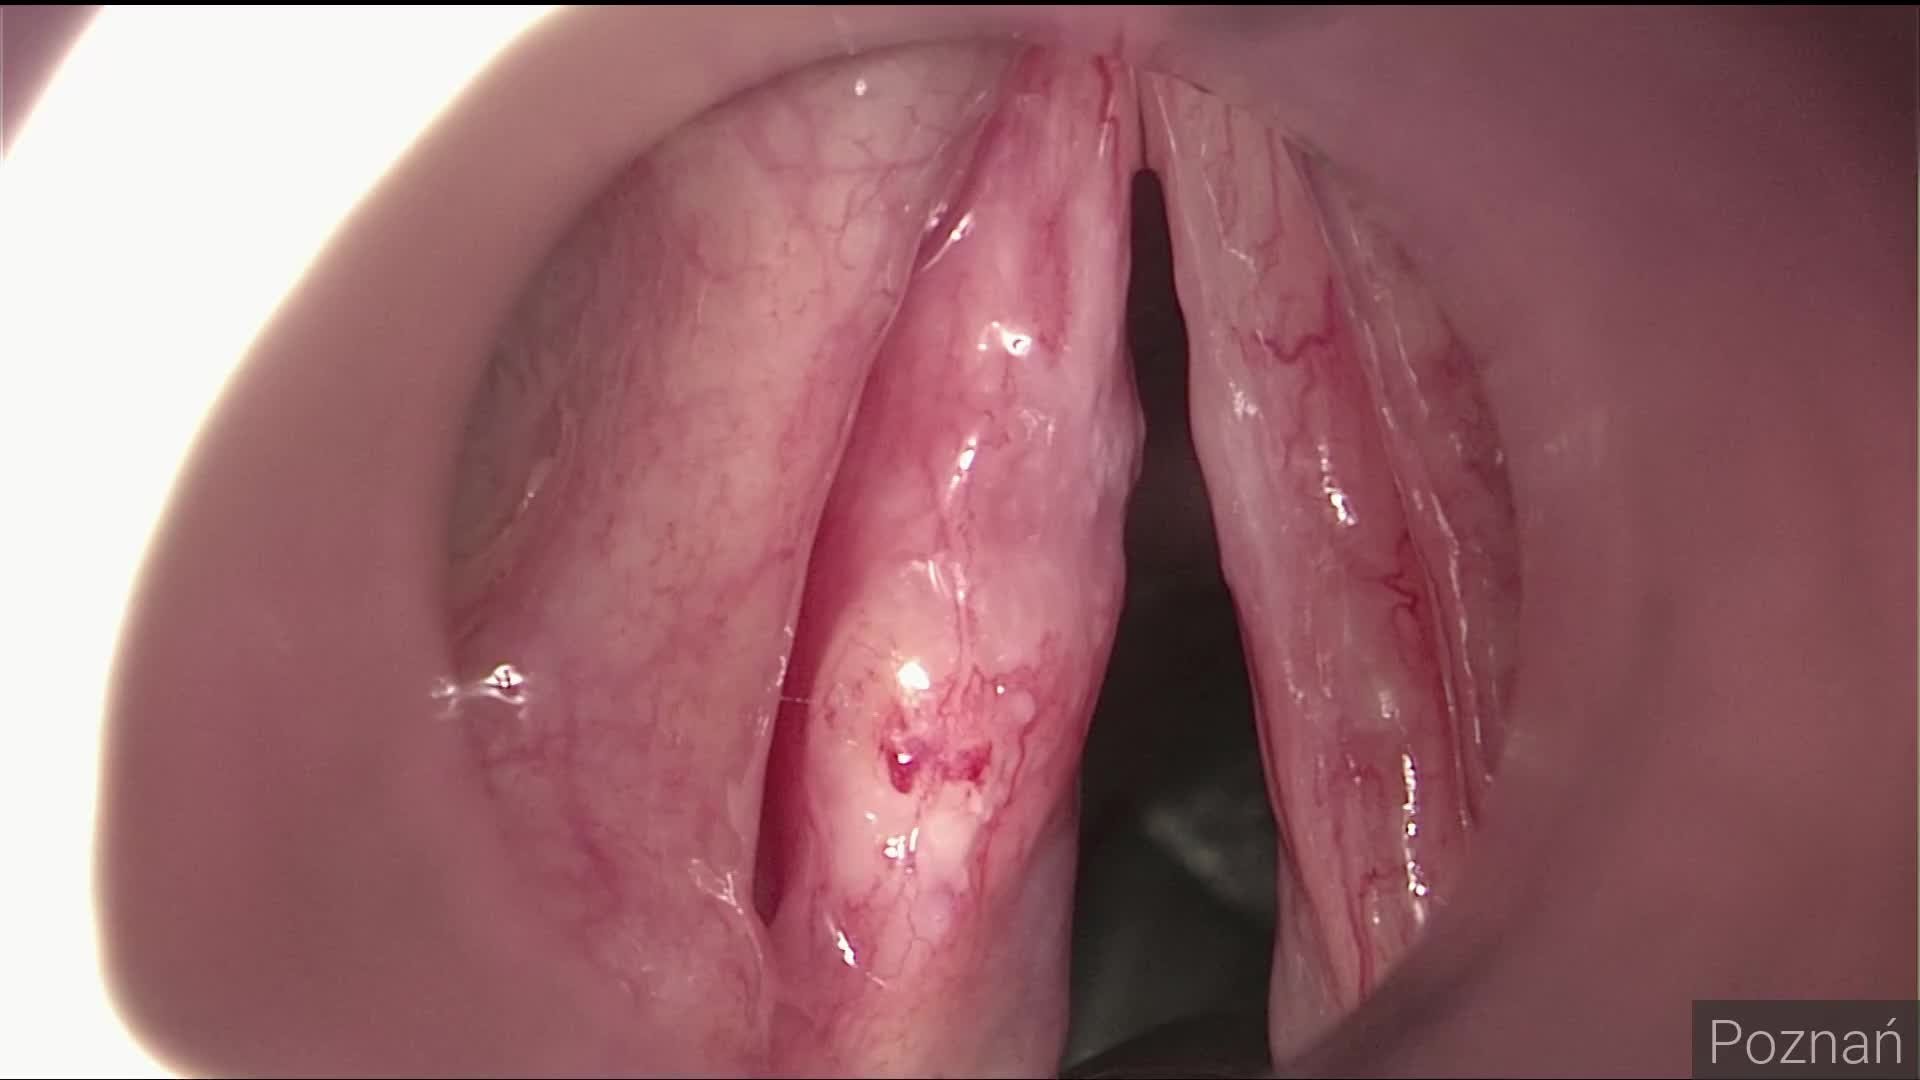 Tumor of the left vocal fold. Cordectomy type II